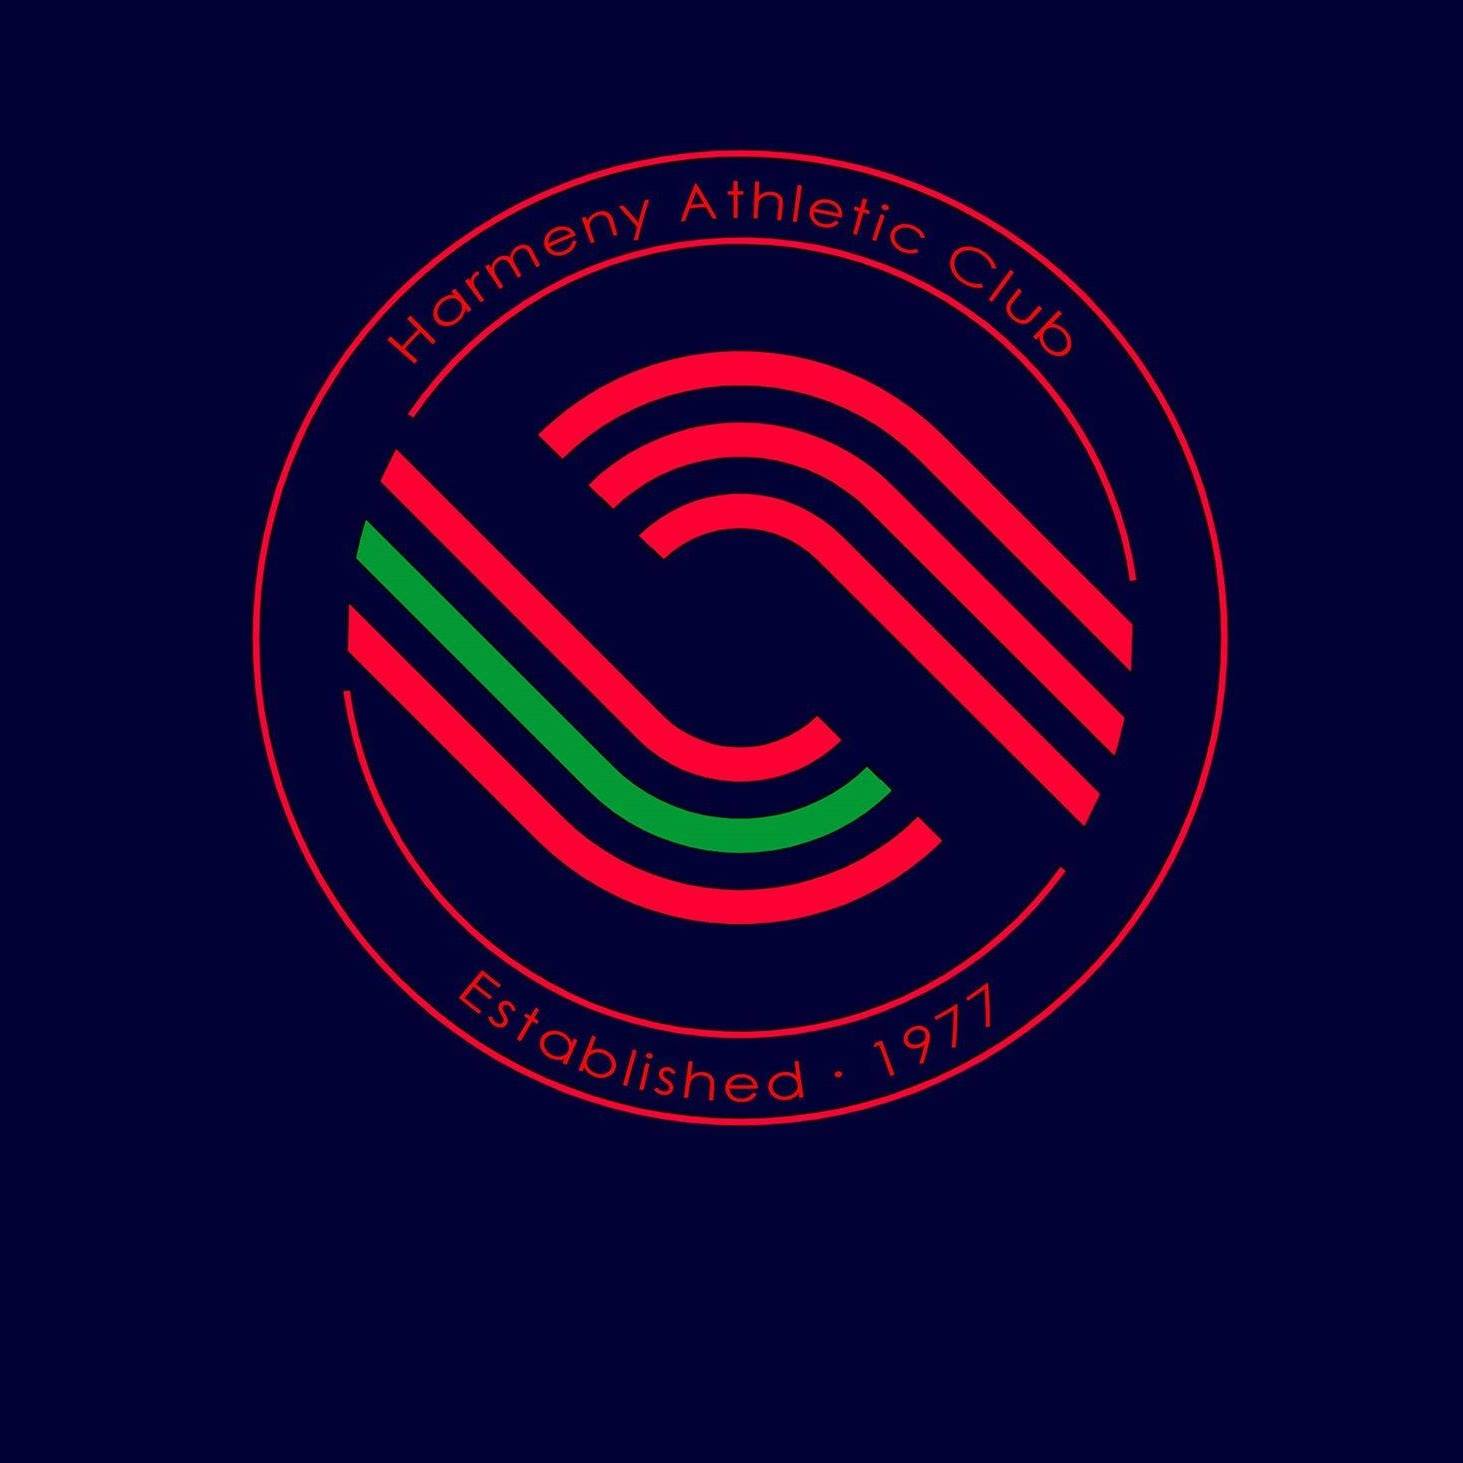 harmeny athletics club logo featured image